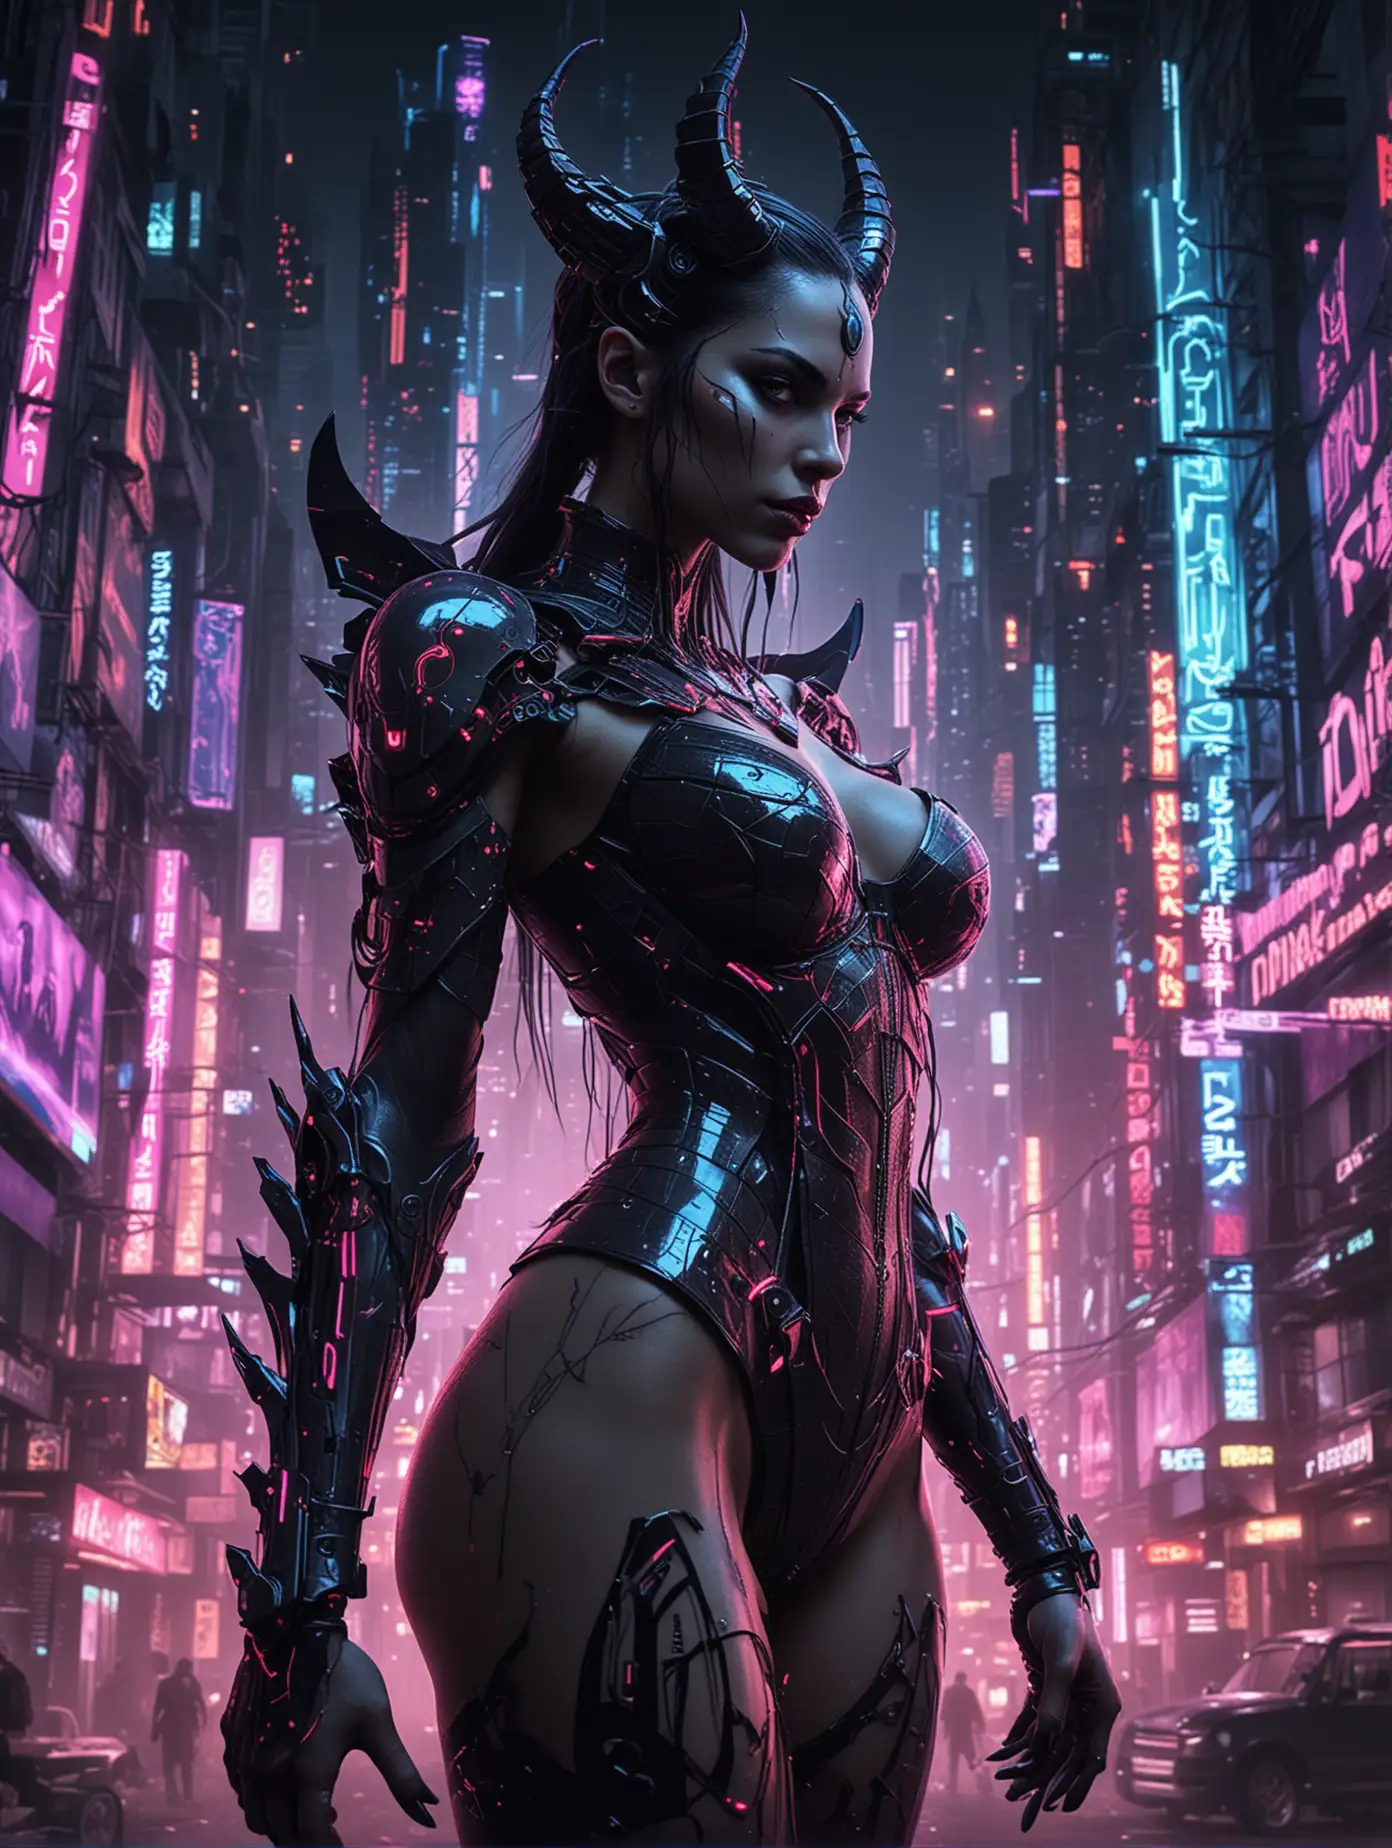 Cyberpunk-Demon-Succubus-in-Neonlit-City-Alley